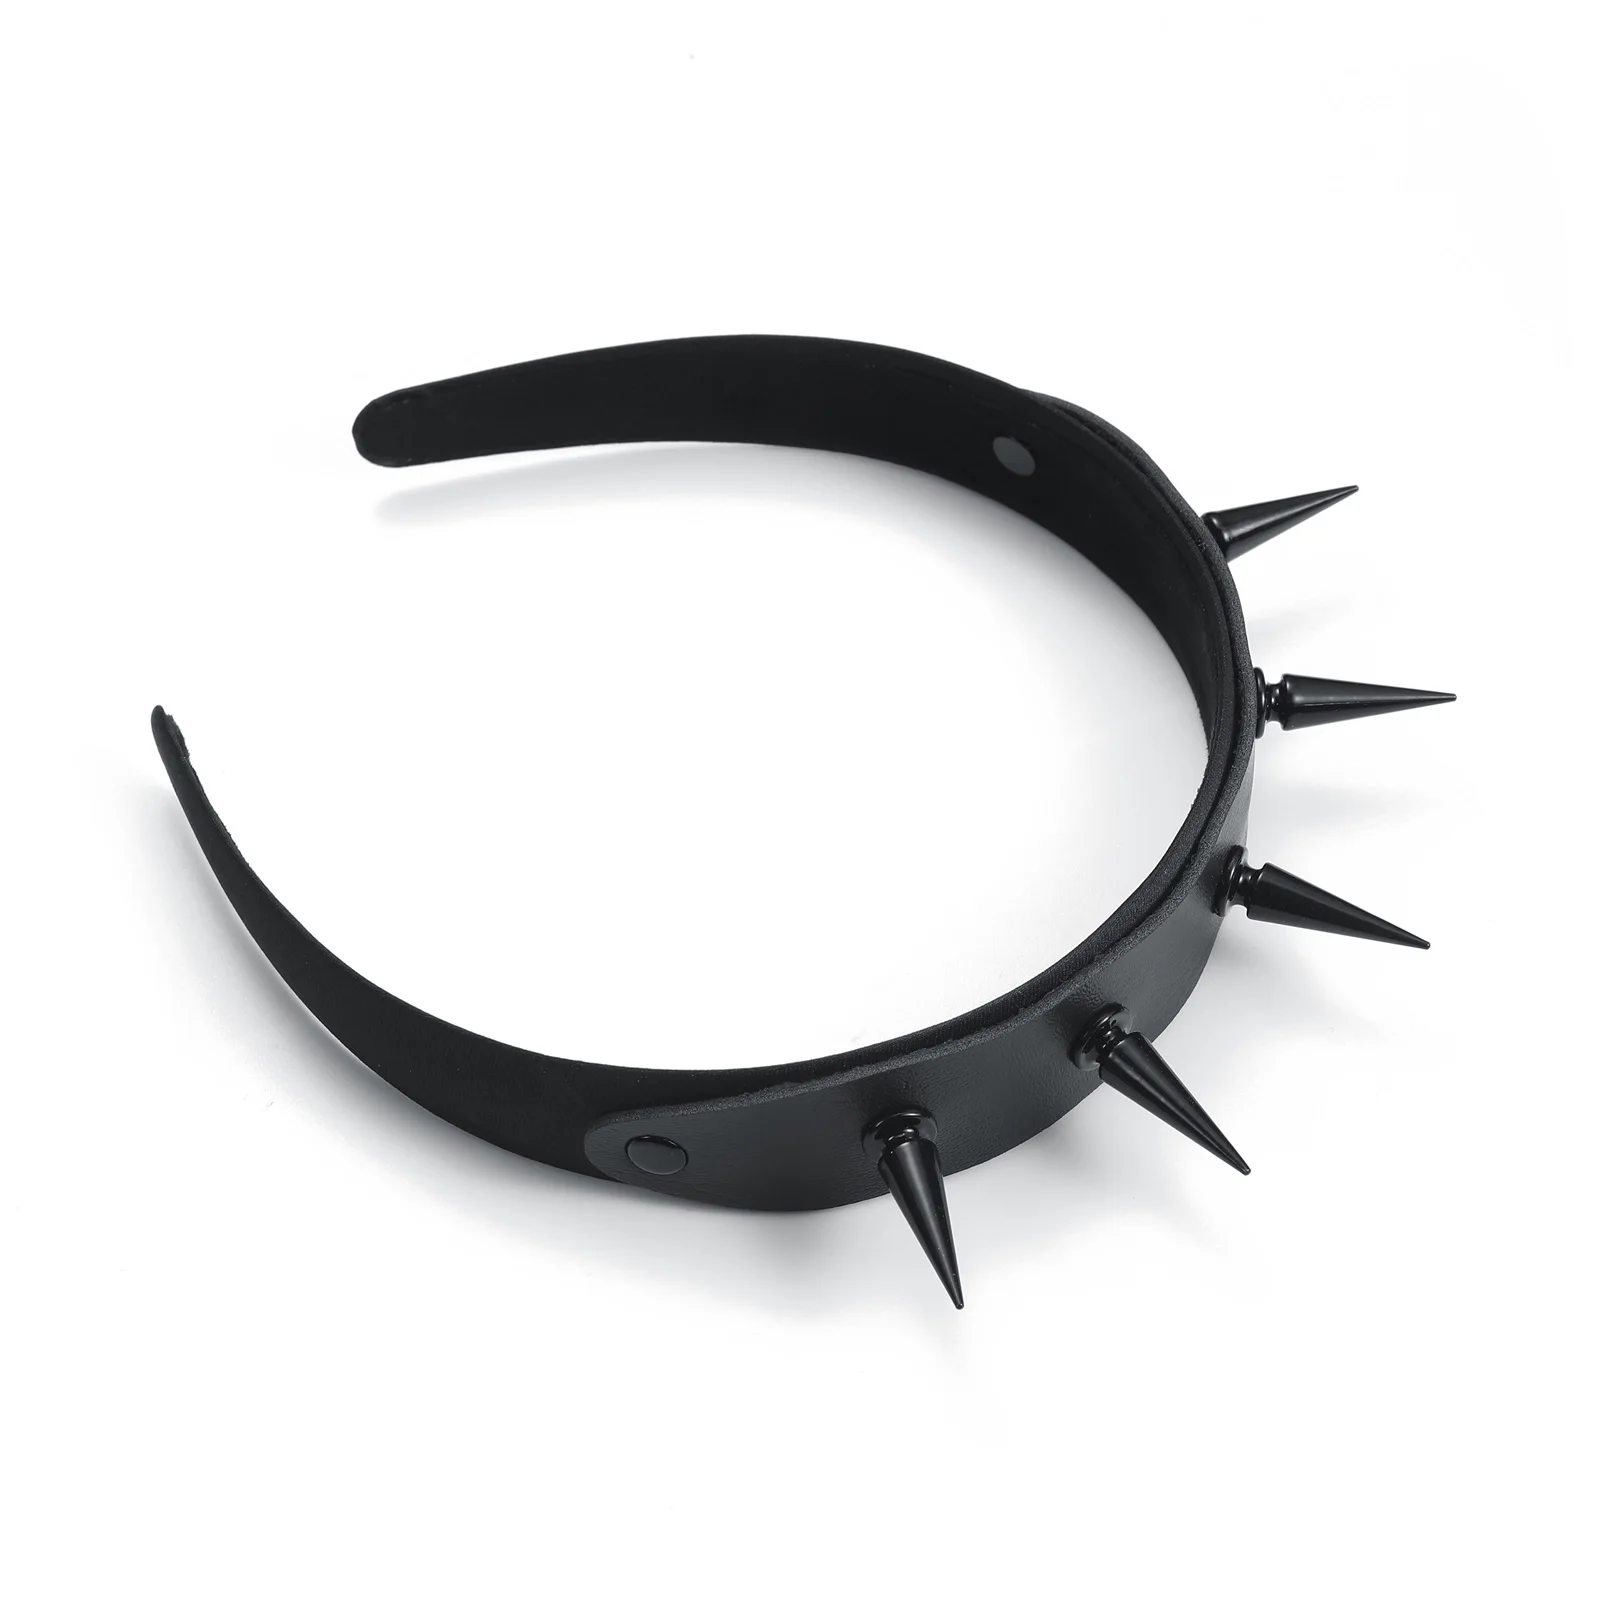 Black Spike HeadBand Goth Hairband Leather Headwear Costume Festival Jewelry Cool Gothic Accessories